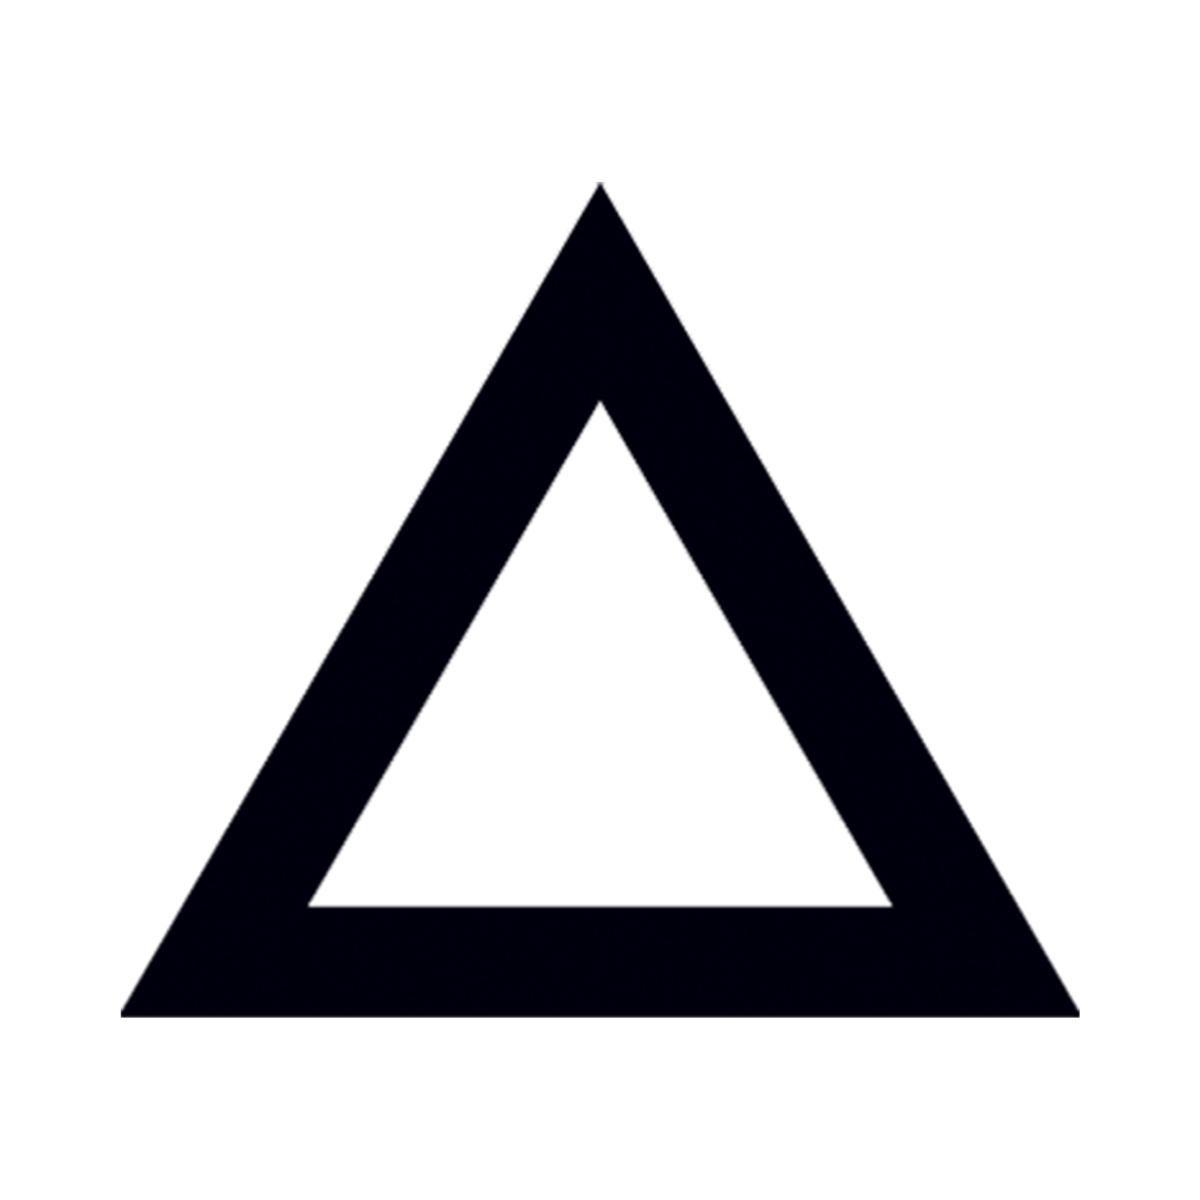 White Triangle Logo - Triangle by Team Tattly from Tattly Temporary Tattoos